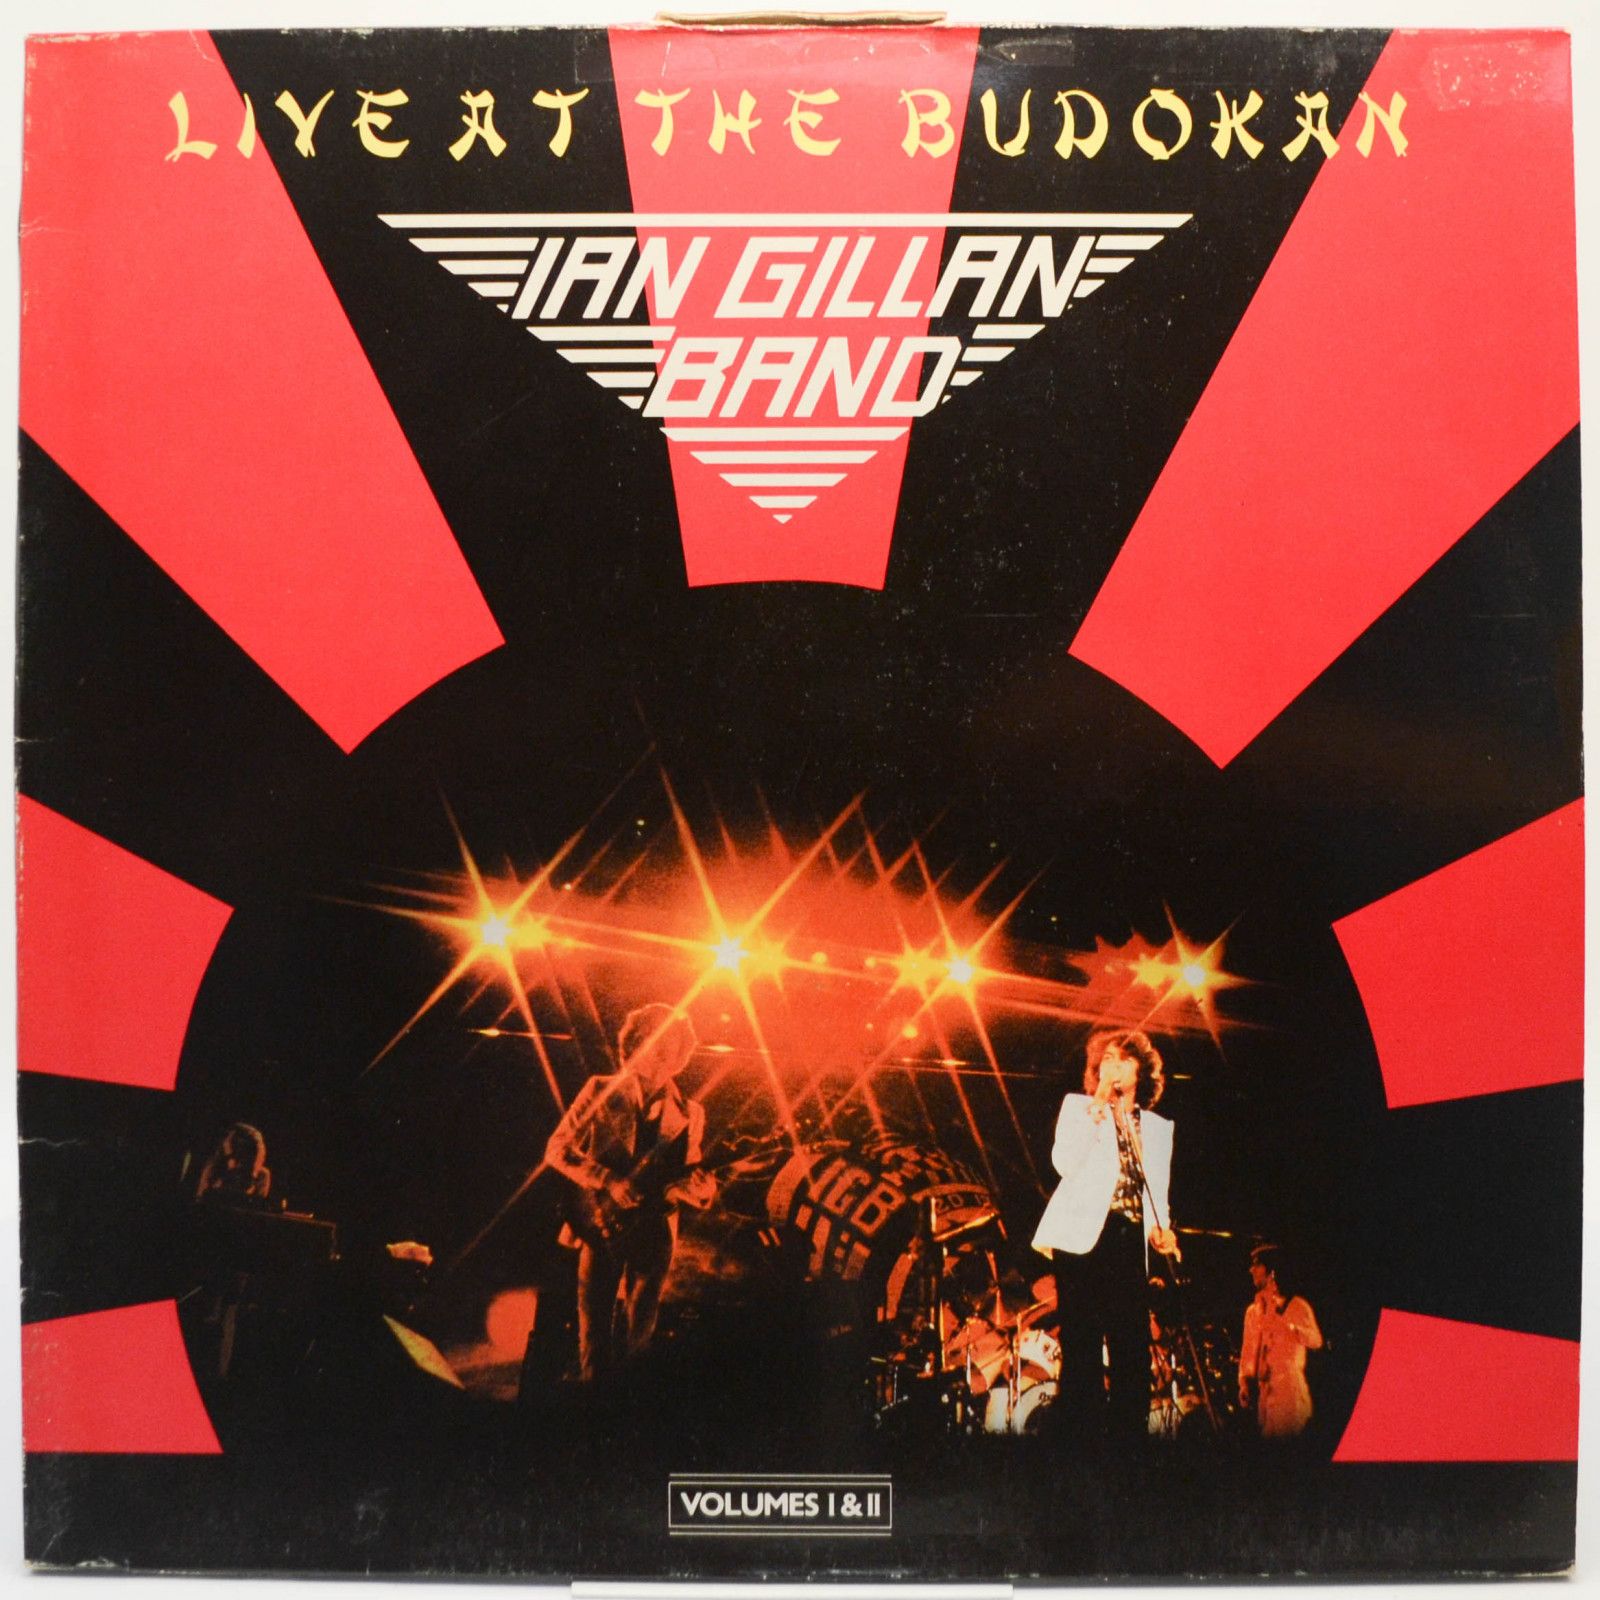 Ian Gillan Band — Live At The Budokan Volumes I & II (2LP), 1983